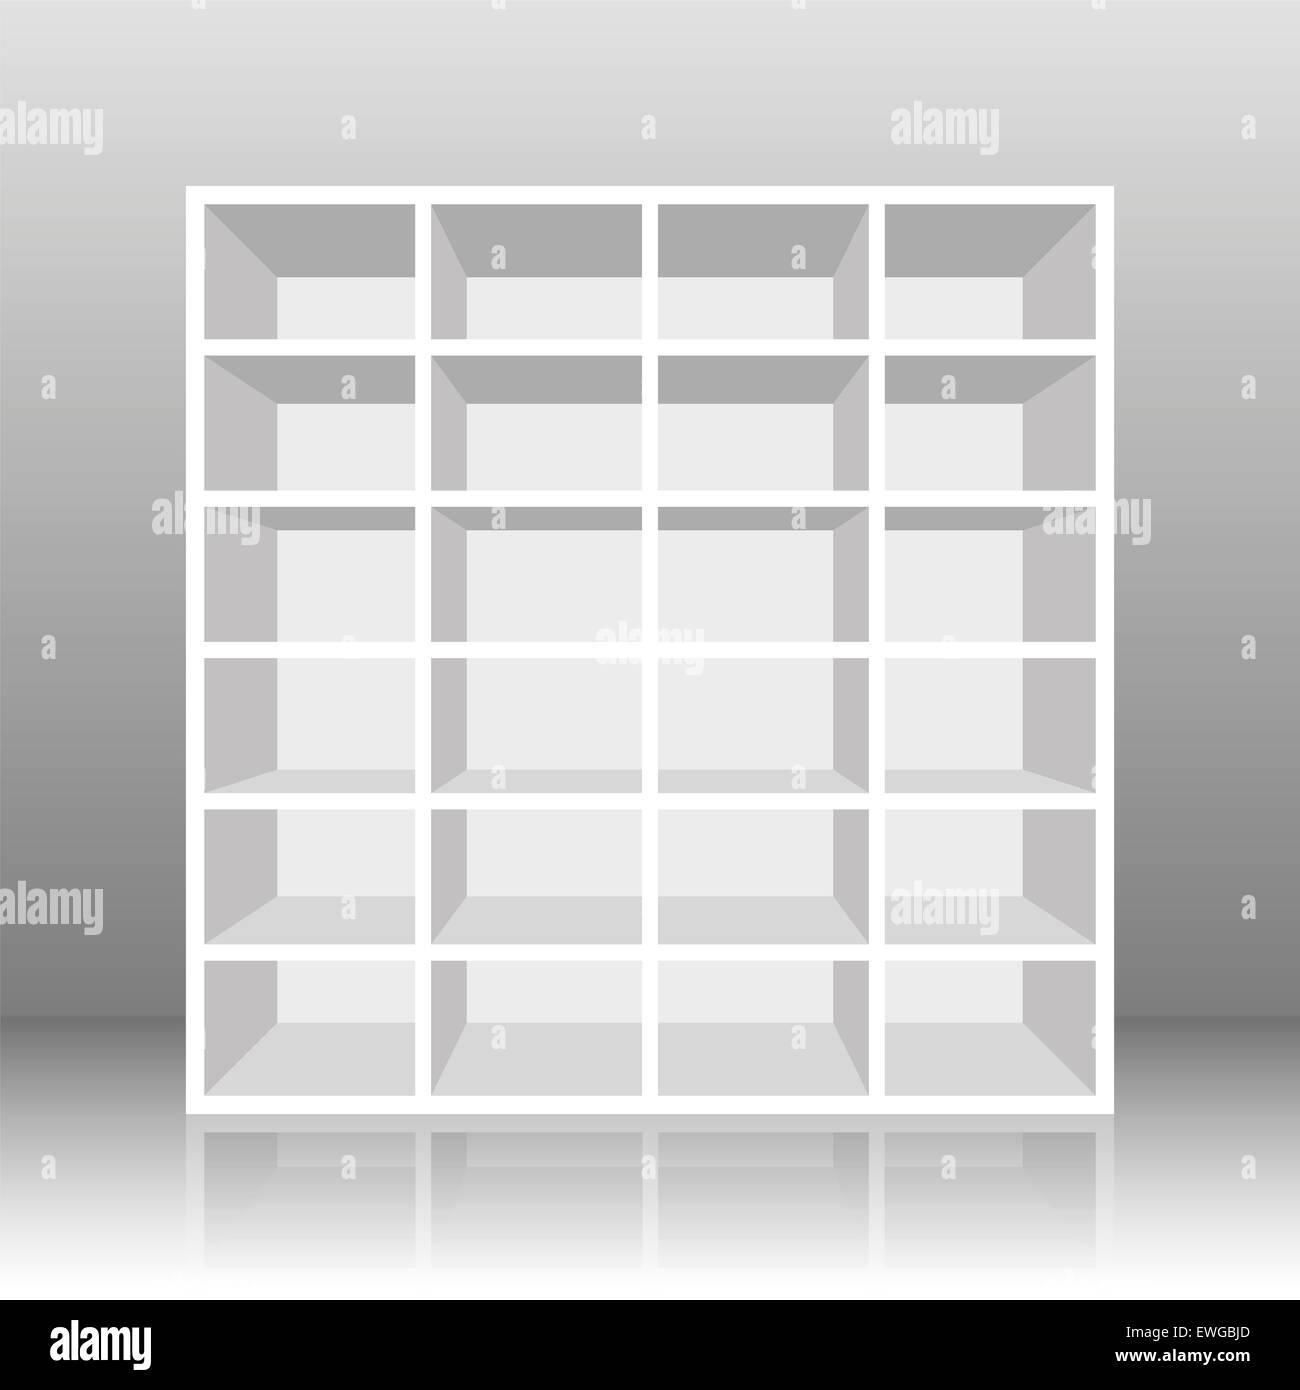 White empty rack or bookshelf with twenty four cubbyholes. Illustration on gray gradient background. Stock Photo